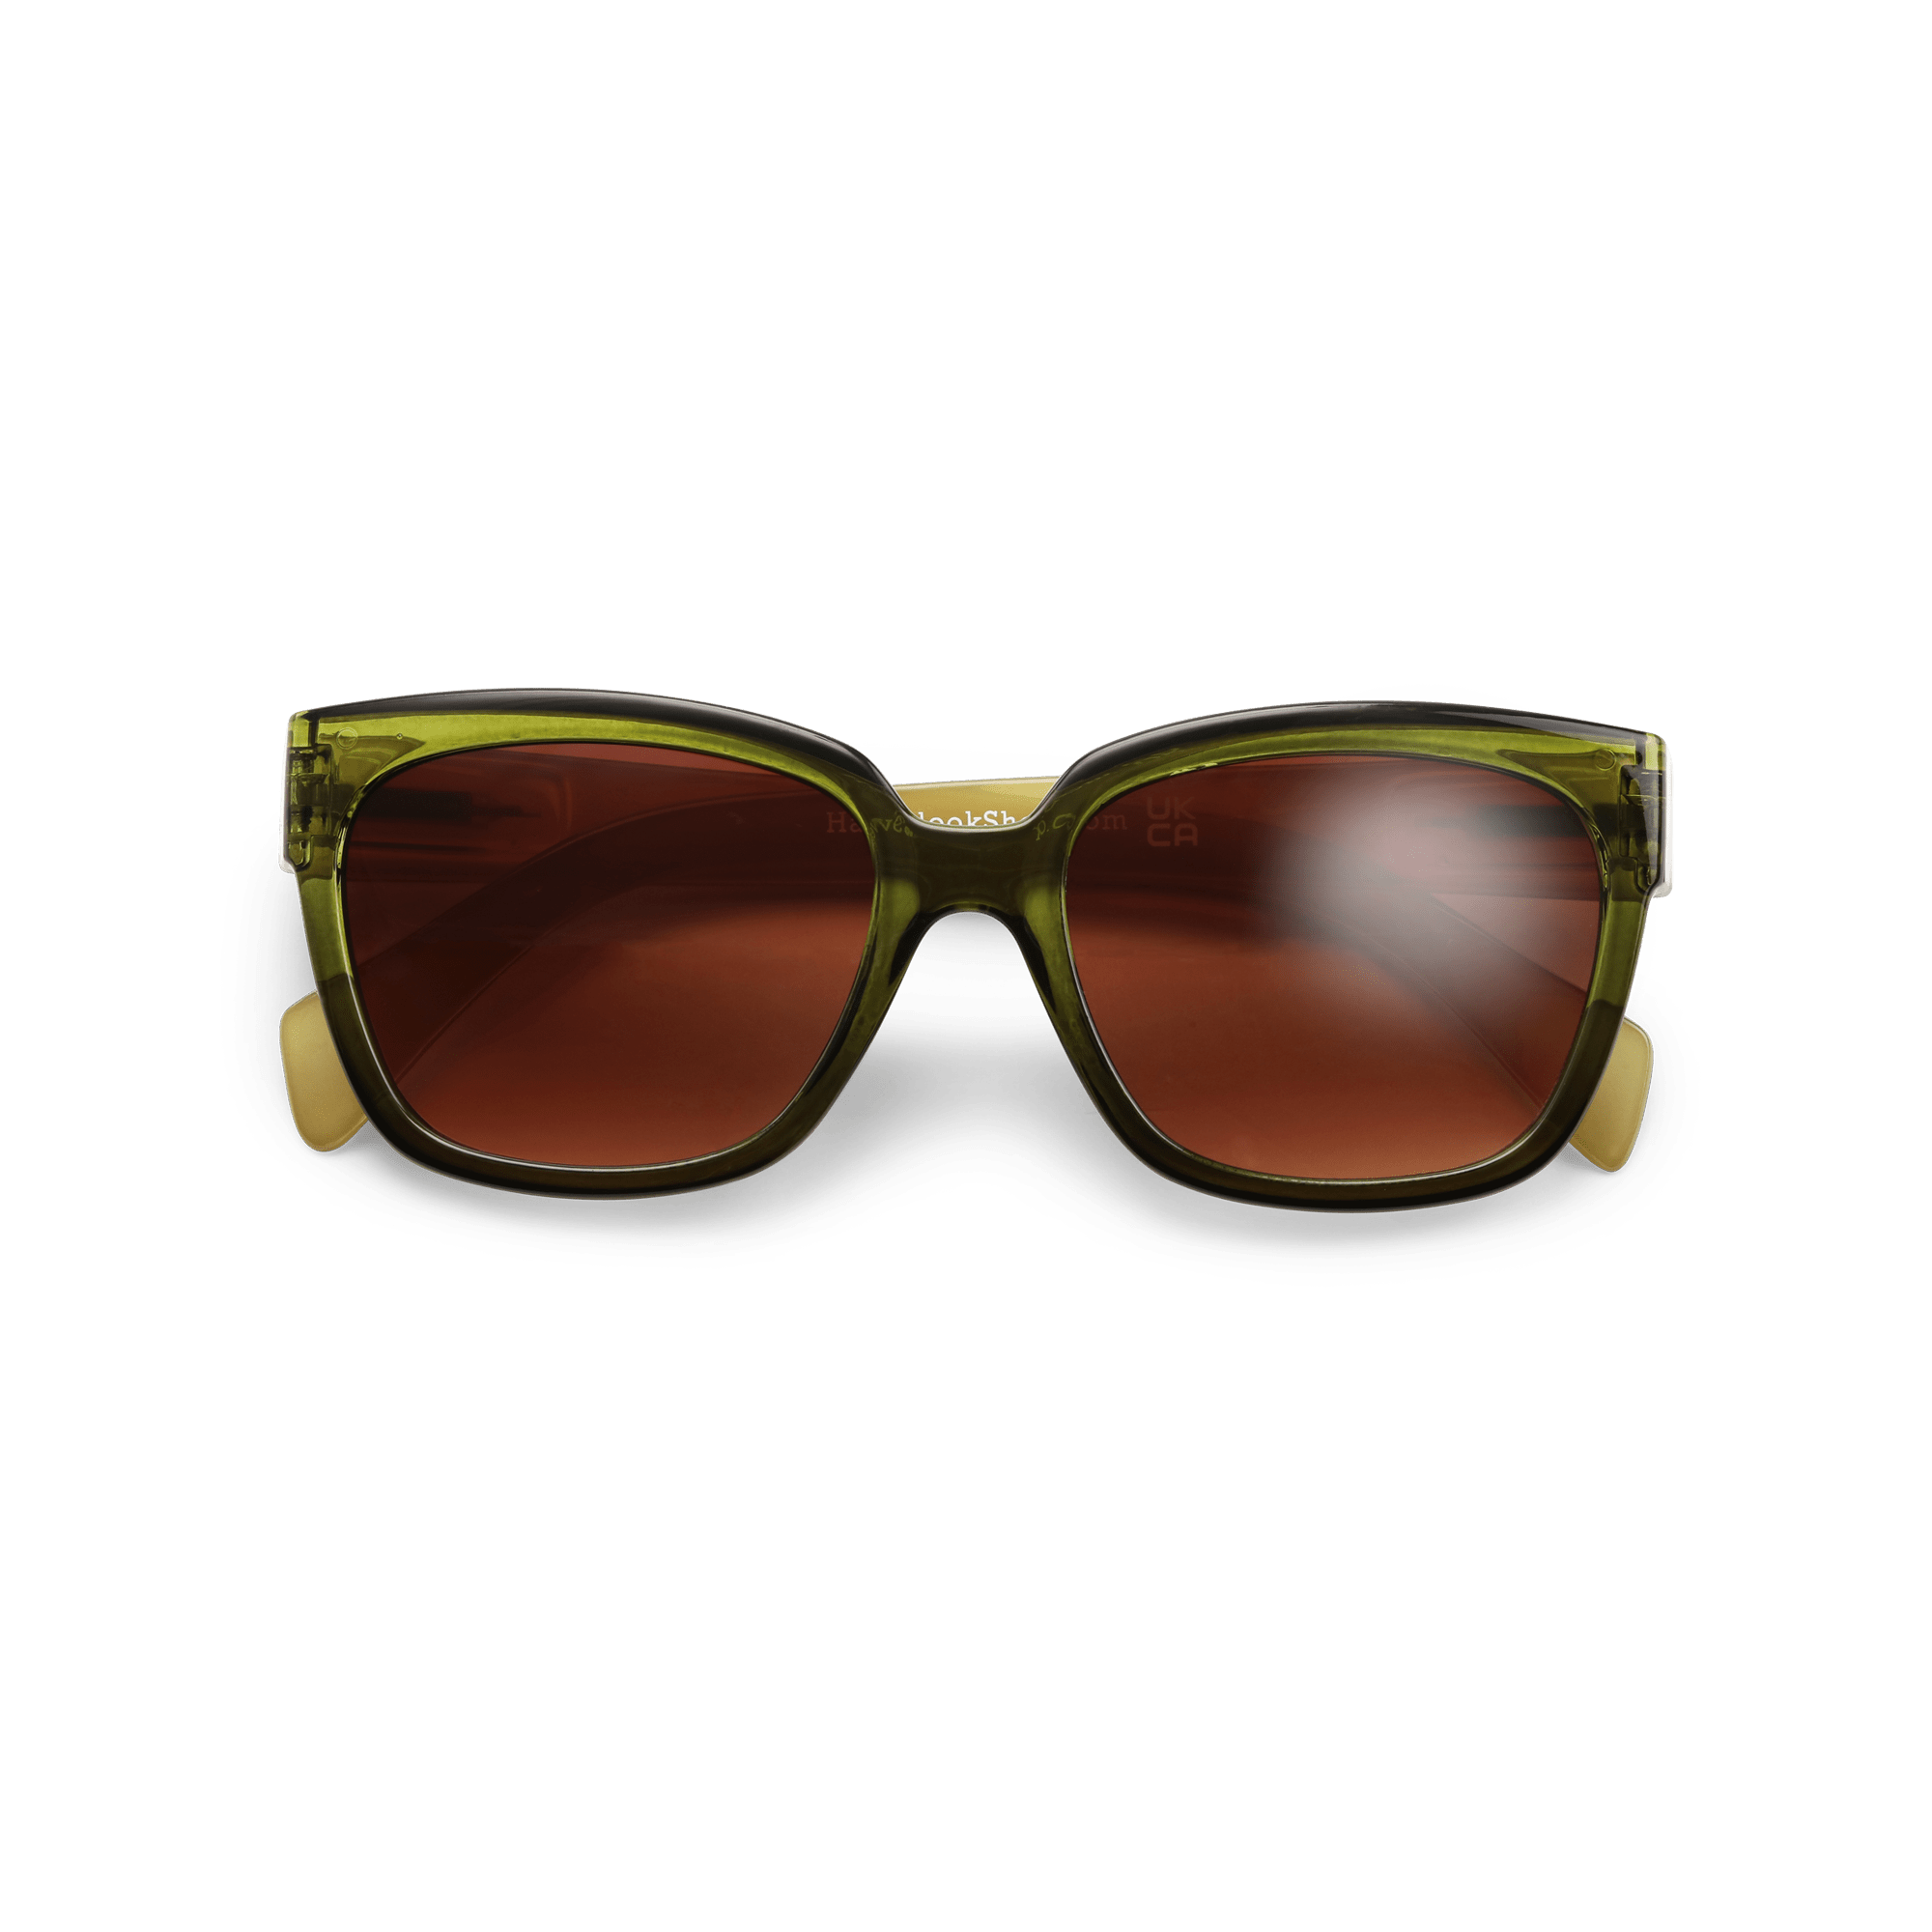 Sonnenbrillen Mood - army/moss aus Have A Look